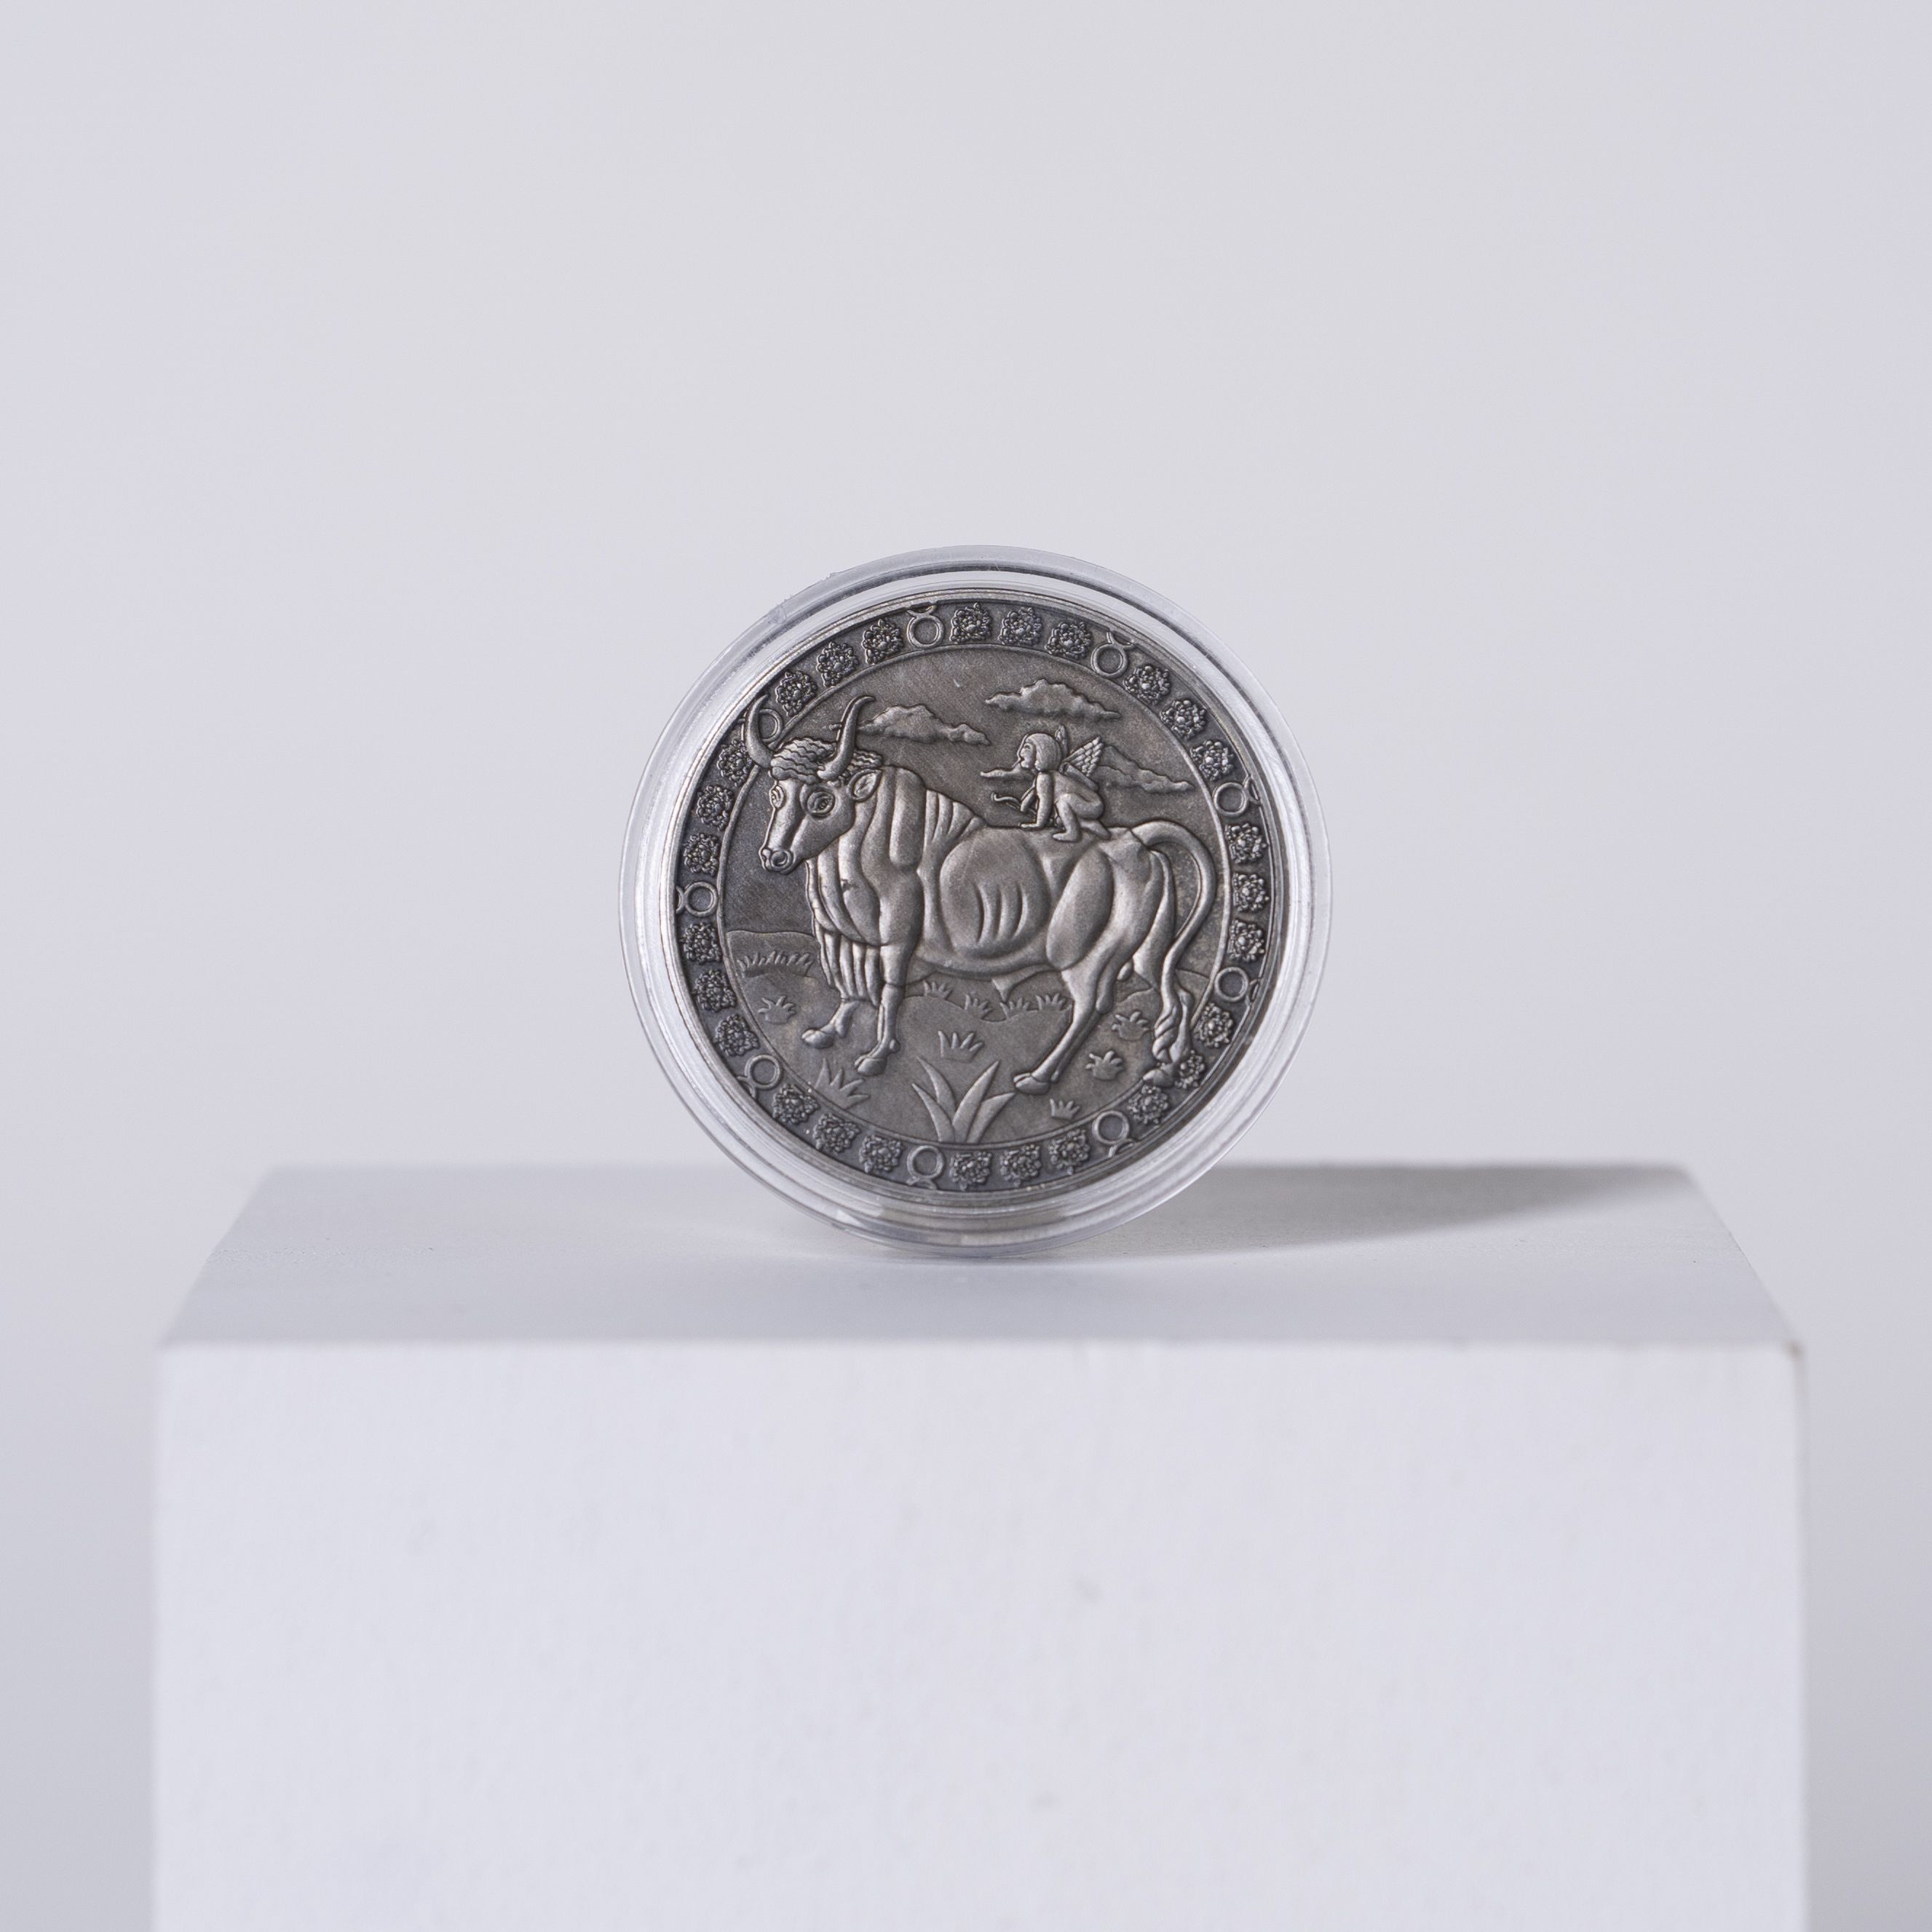 Монета телец. Серебряная монета Телец. Серебряная монета Телец Сбербанк стоимость.